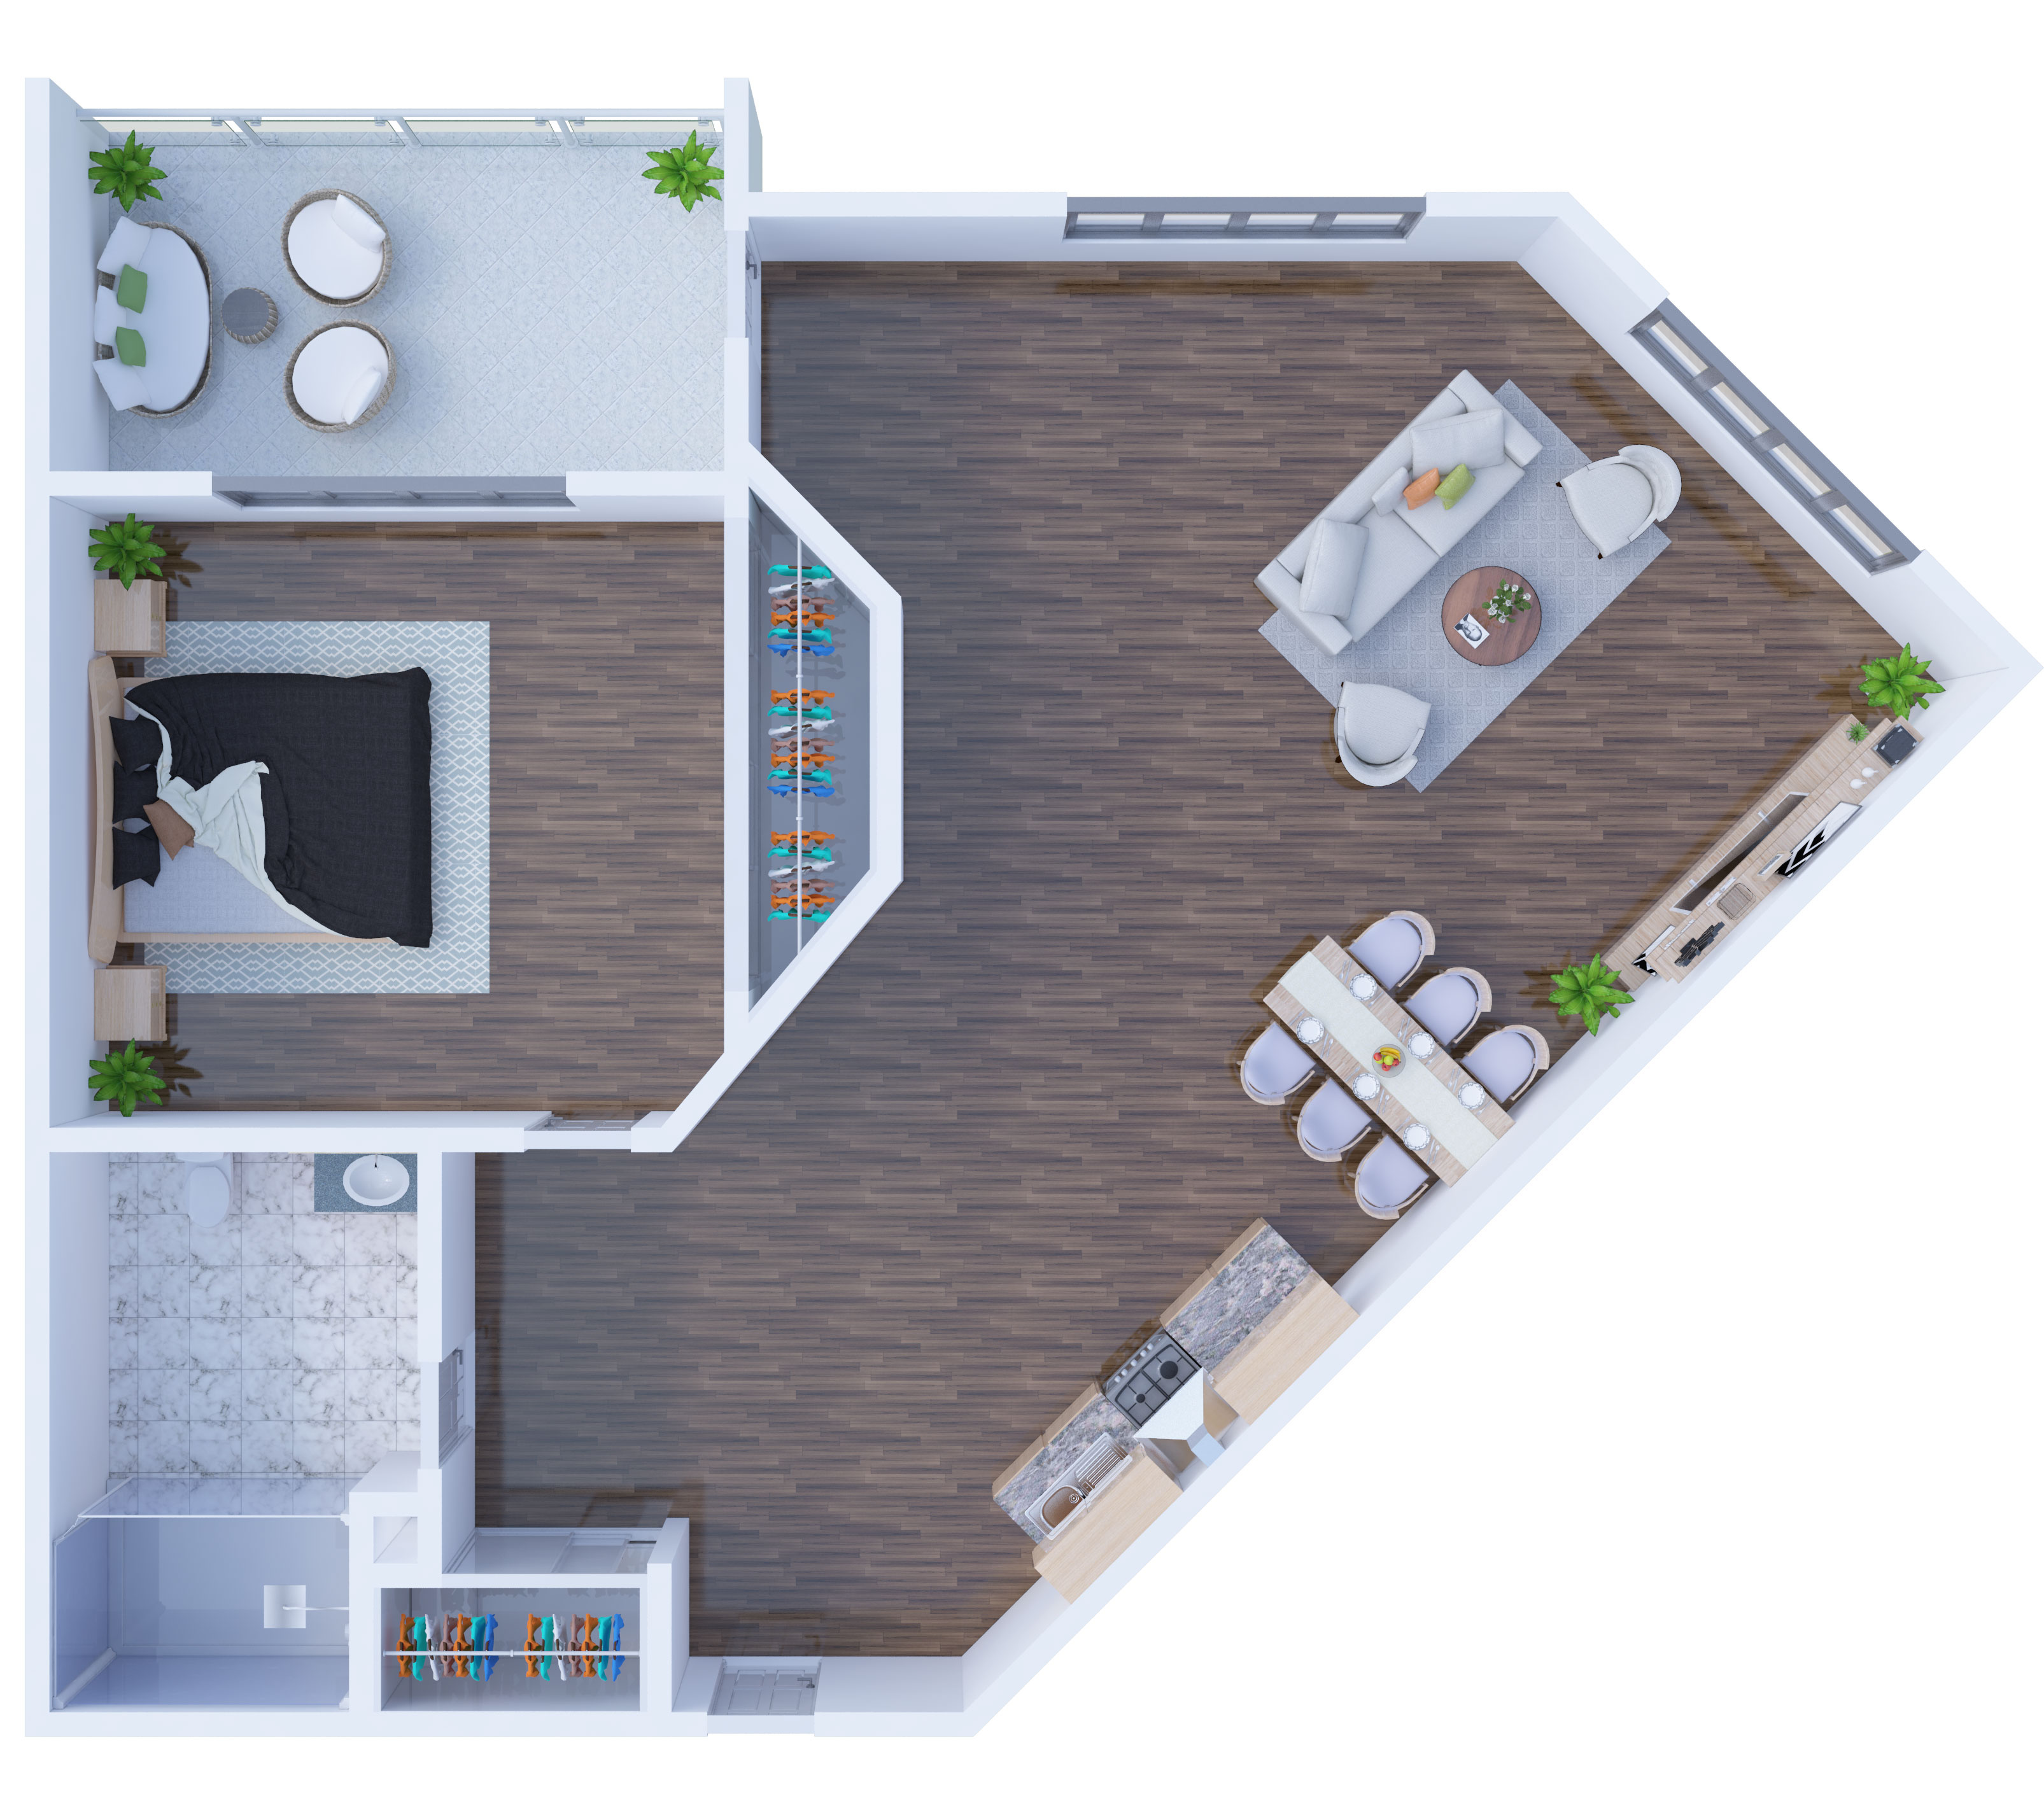 B10 floor plan